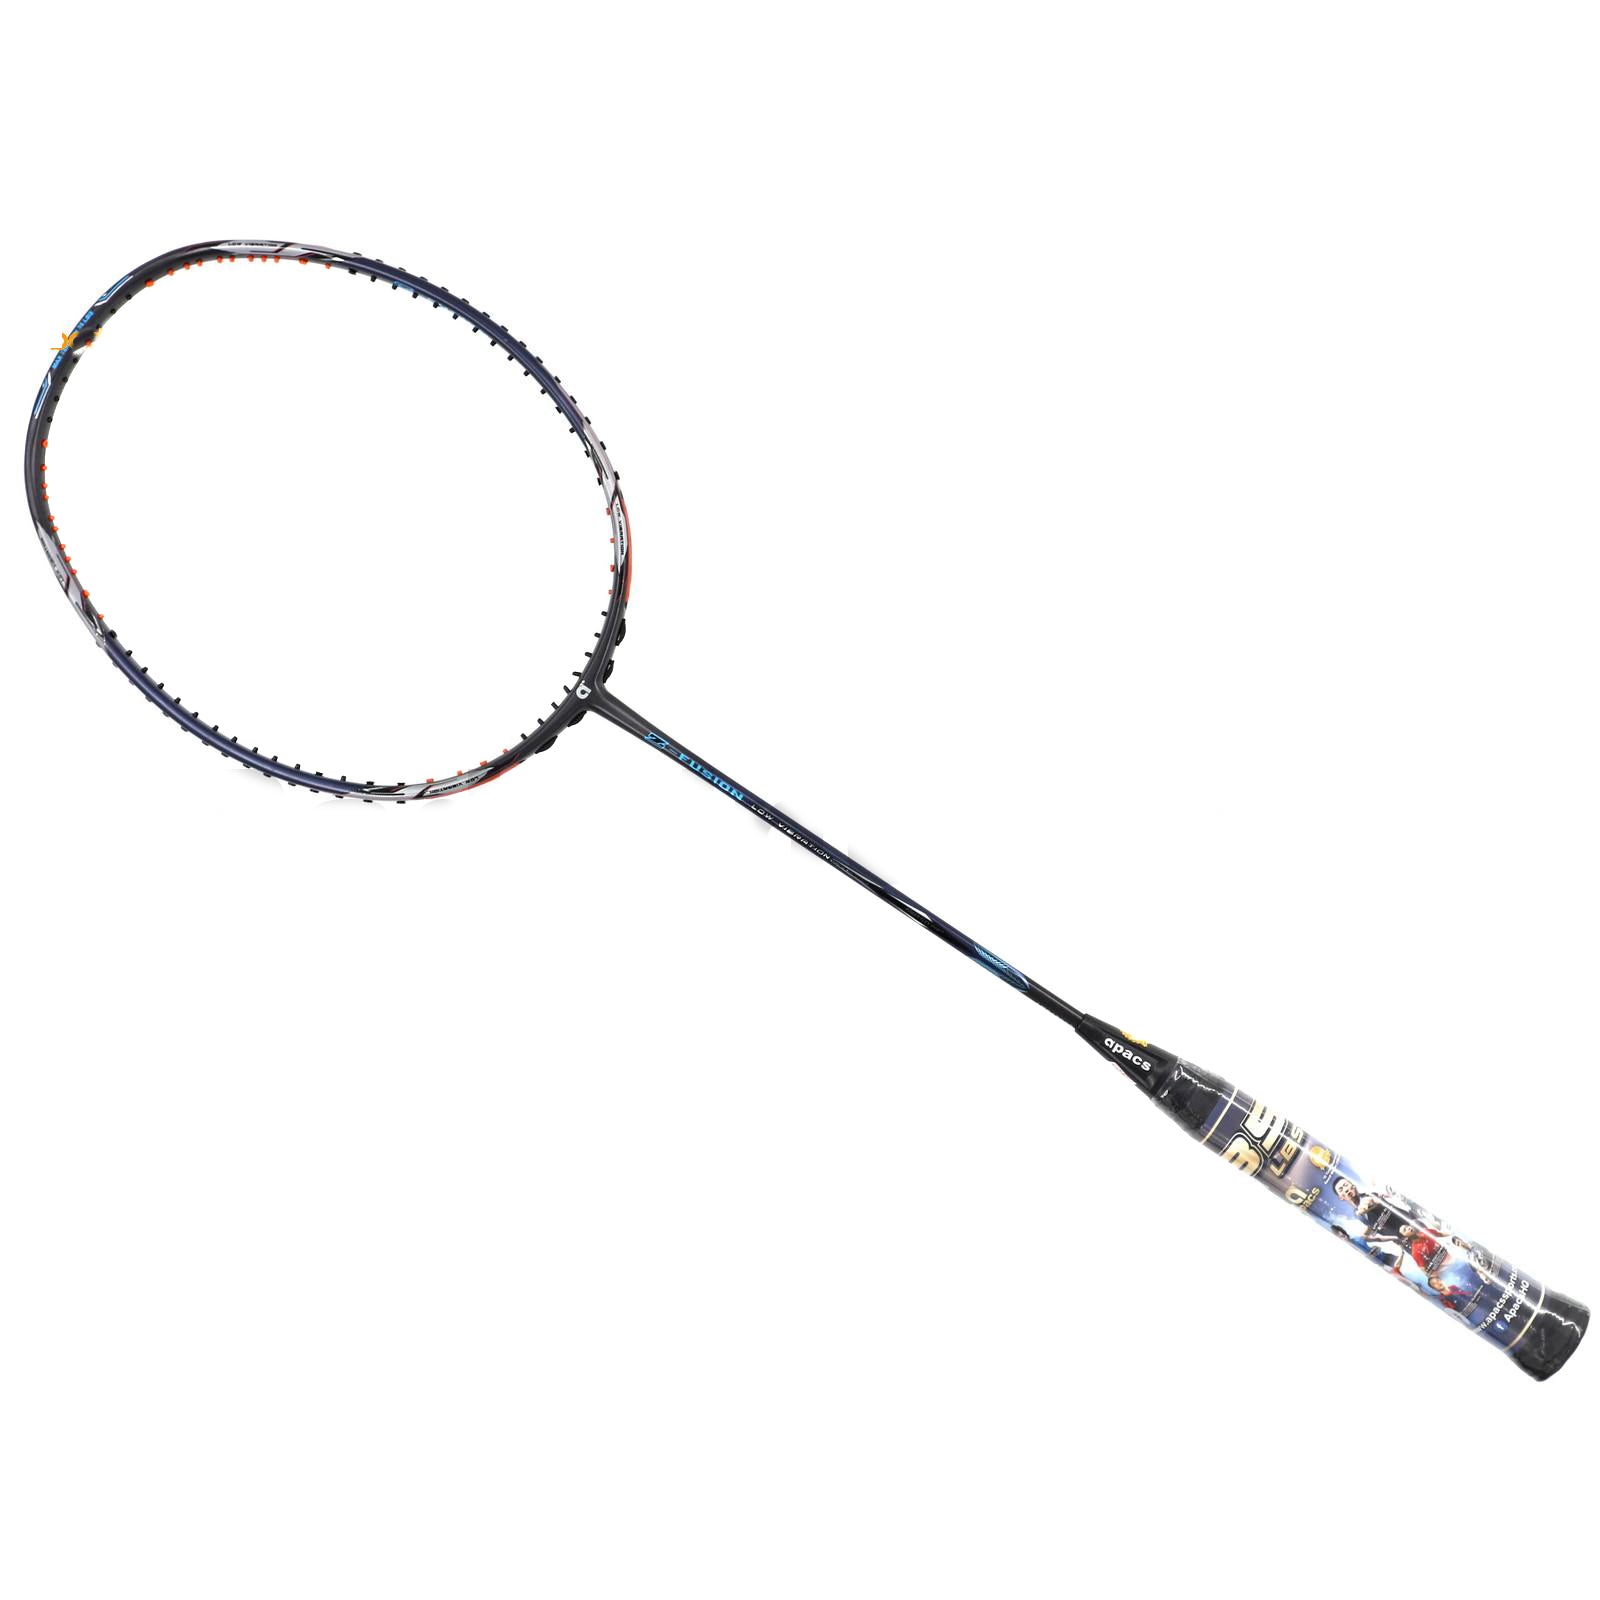 APACS Z-Fusion Badminton Racket